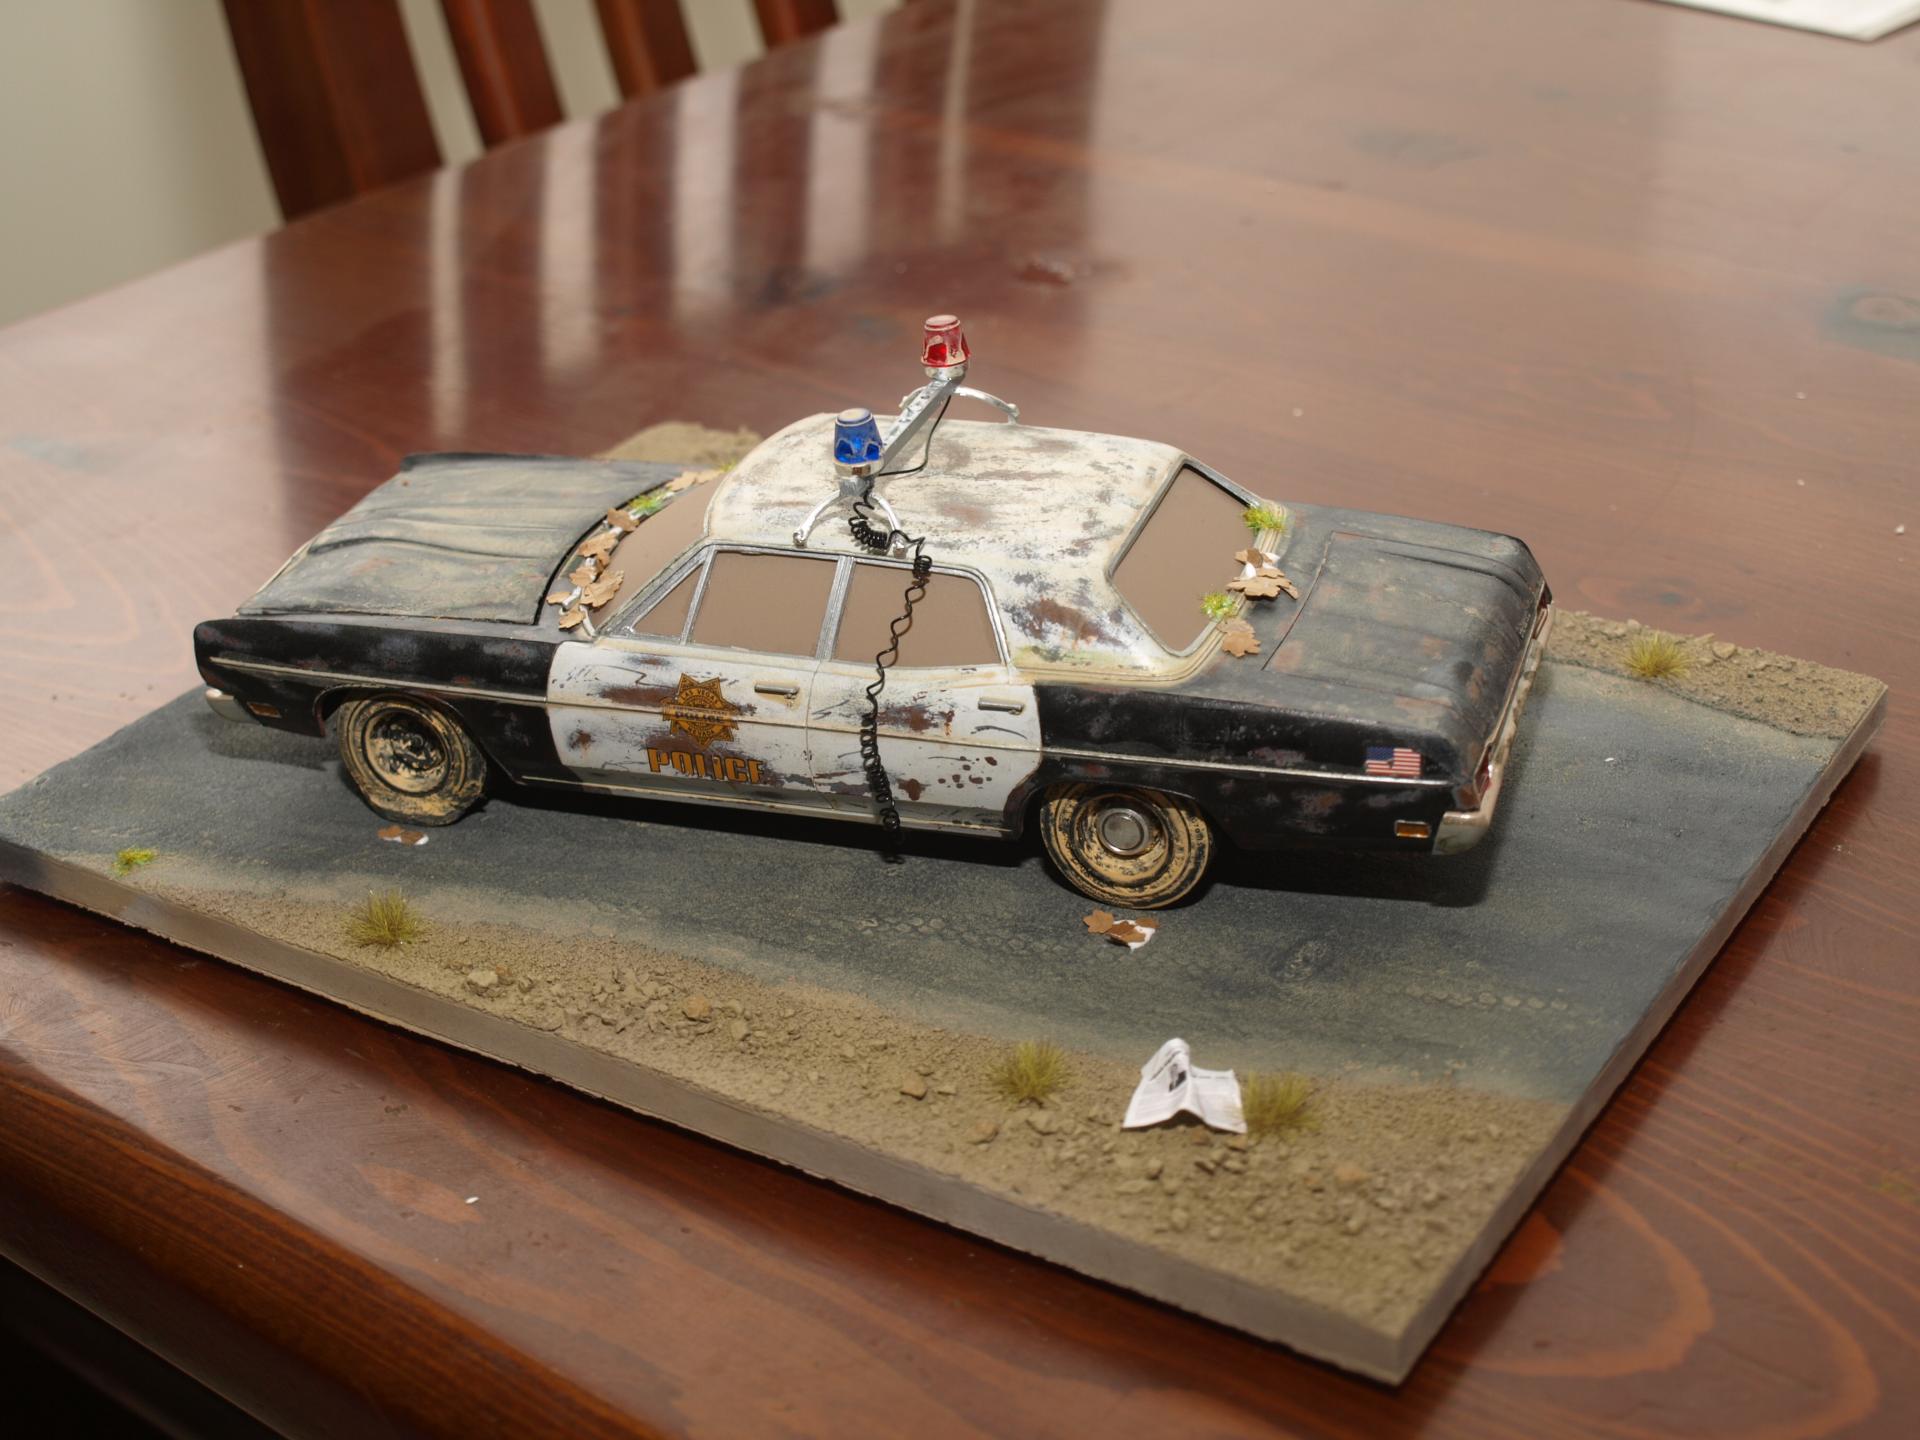 Abandoned Police Car Diorama. - Model Cars - Model Cars Magazine Forum